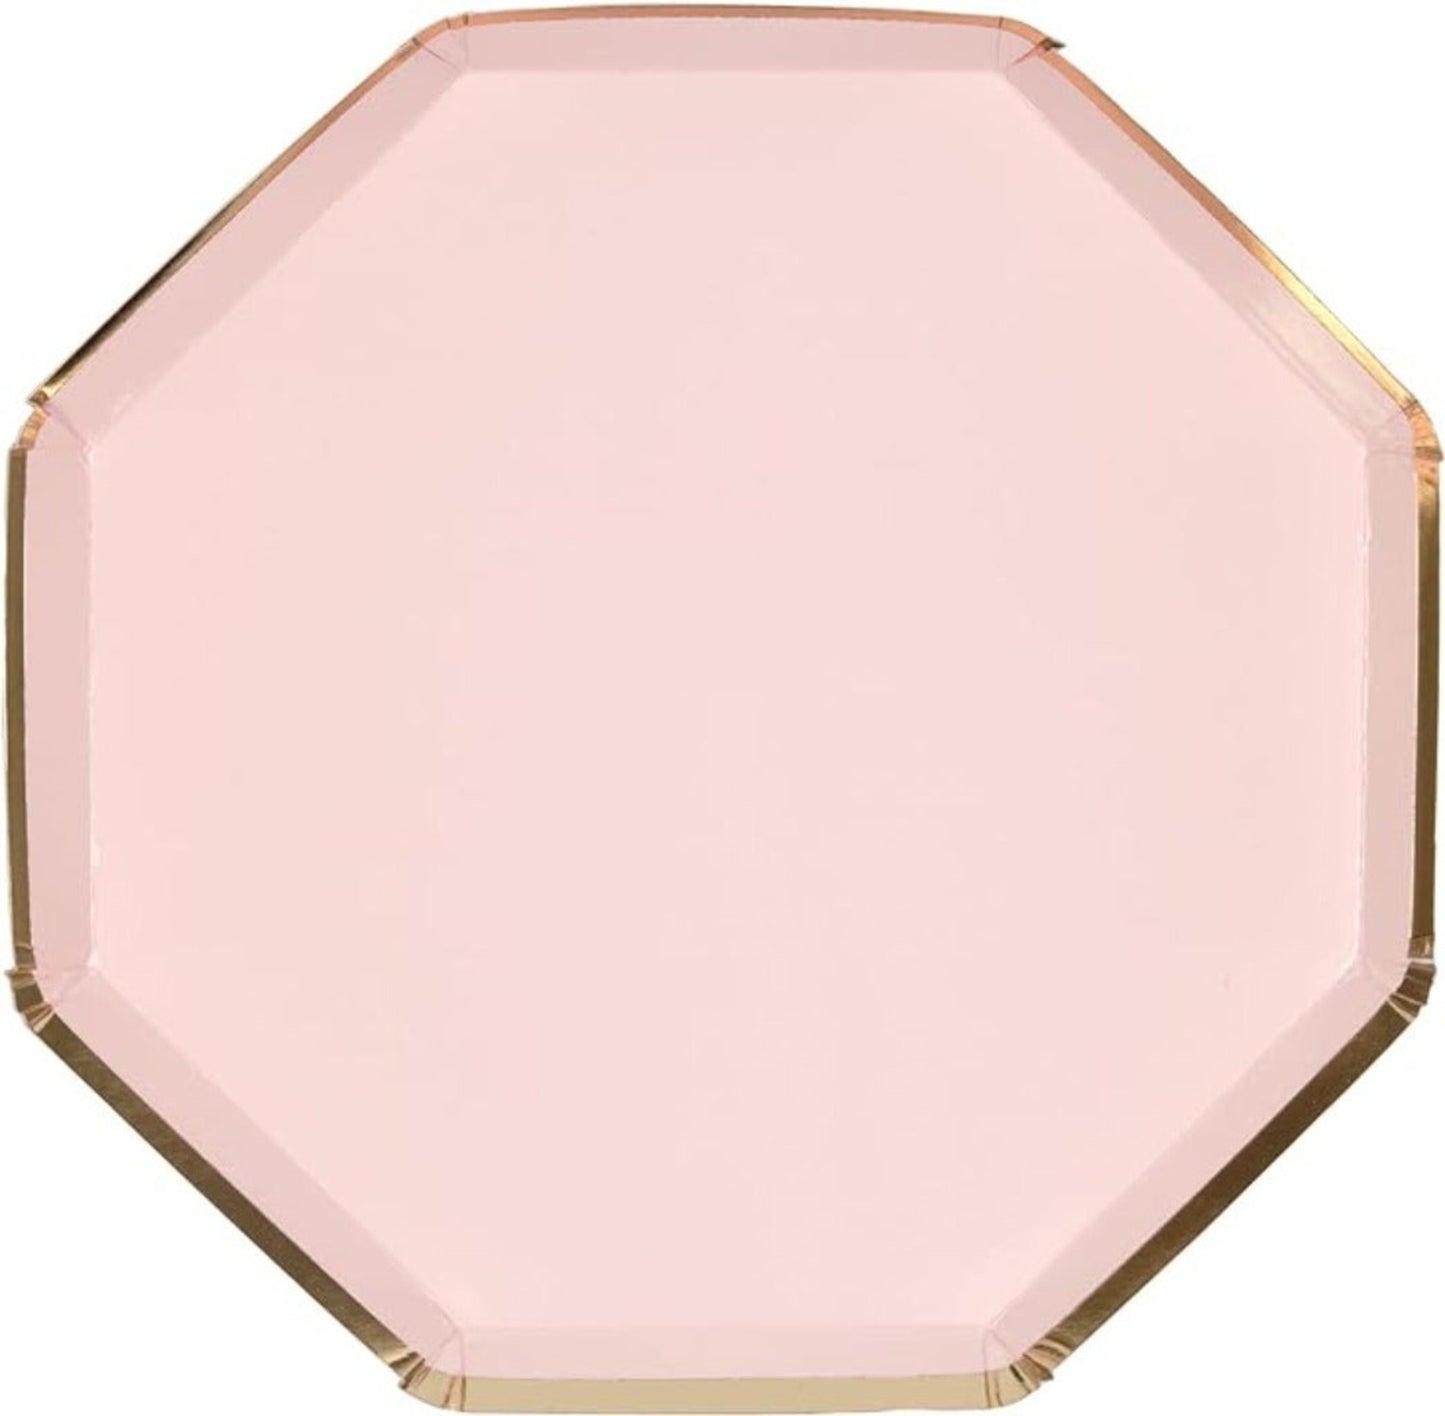 Platos de cóctel rosa polvoriento